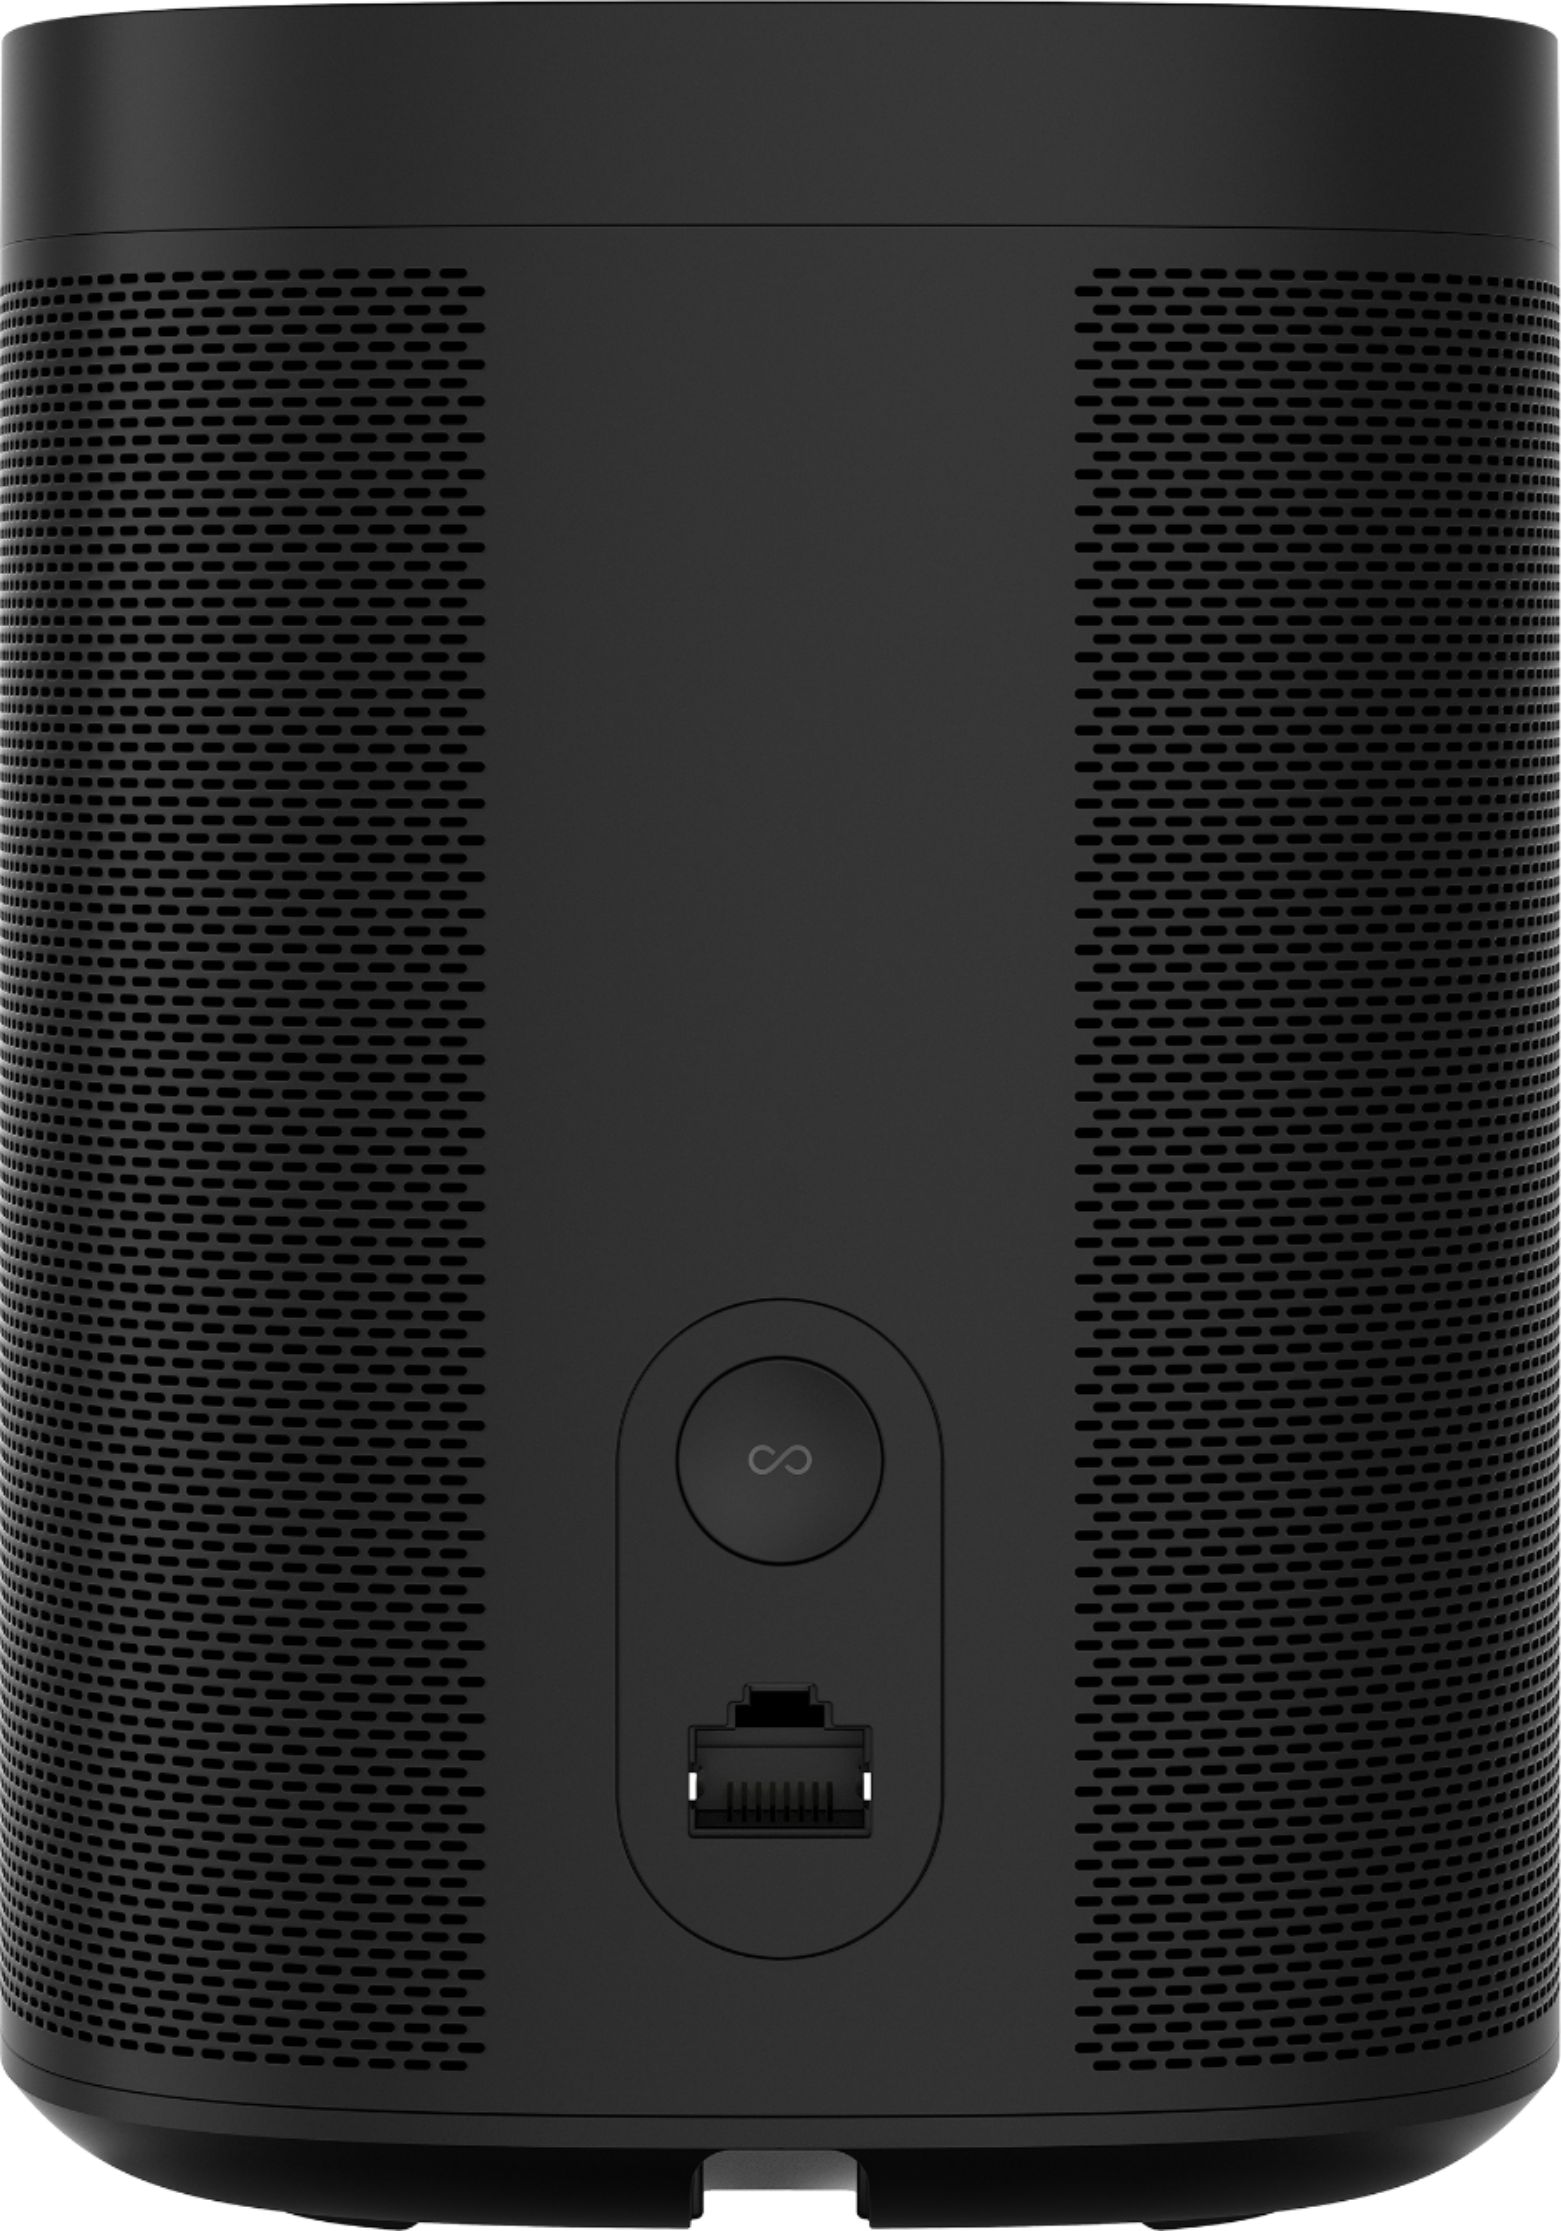 Sonos One (Gen Smart Speaker with Voice Control built-in ONEG2US1BLK - Best Buy